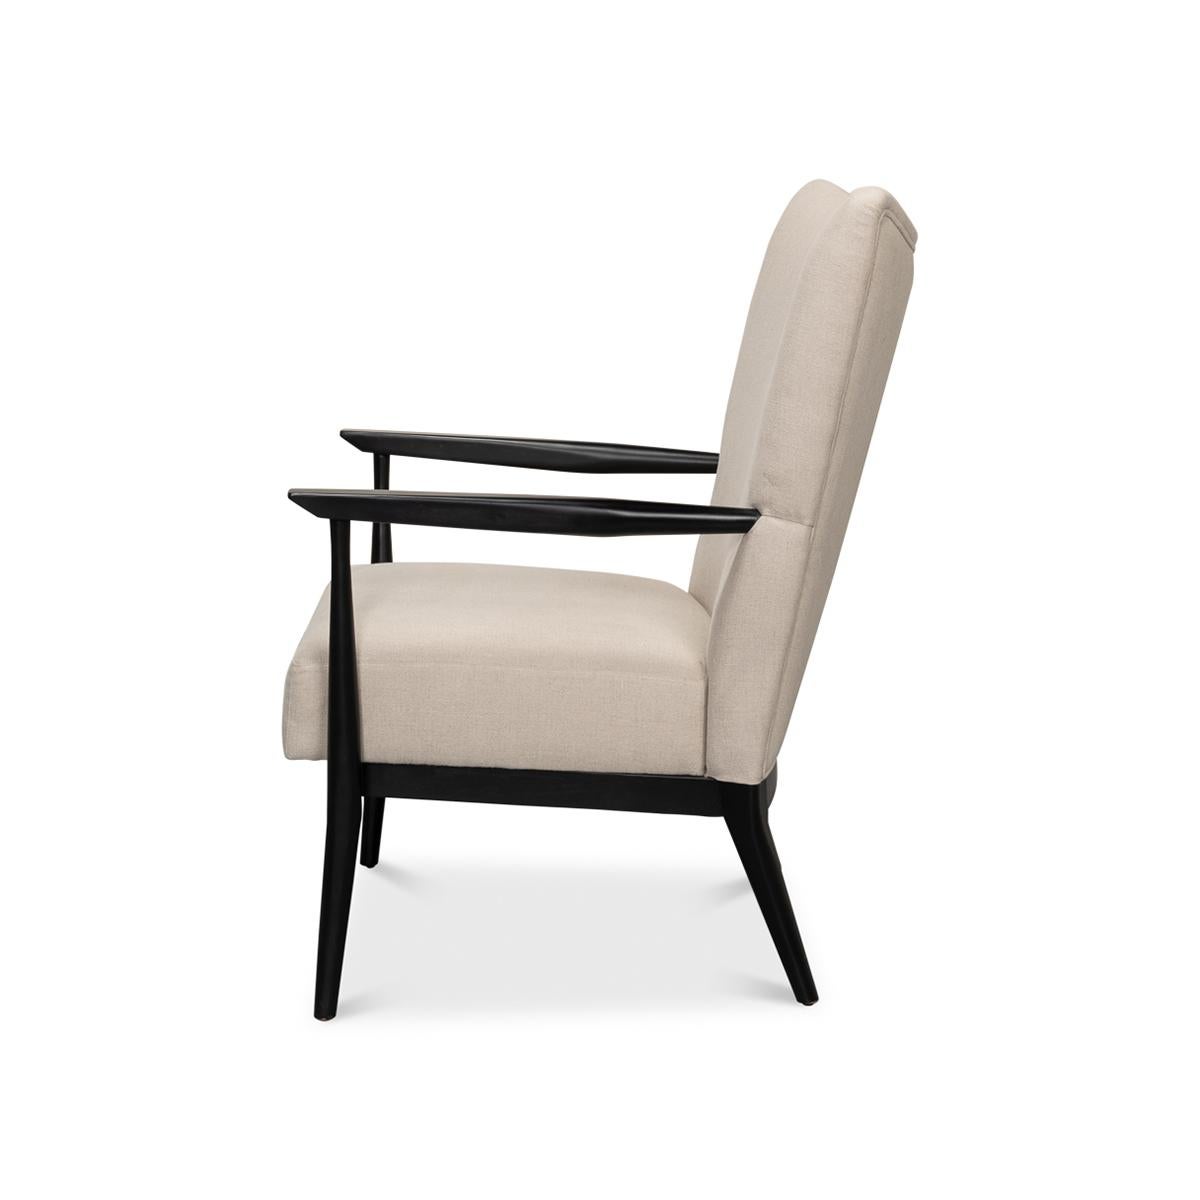 Mid-Century Modern Mid-Century Lounge Chair